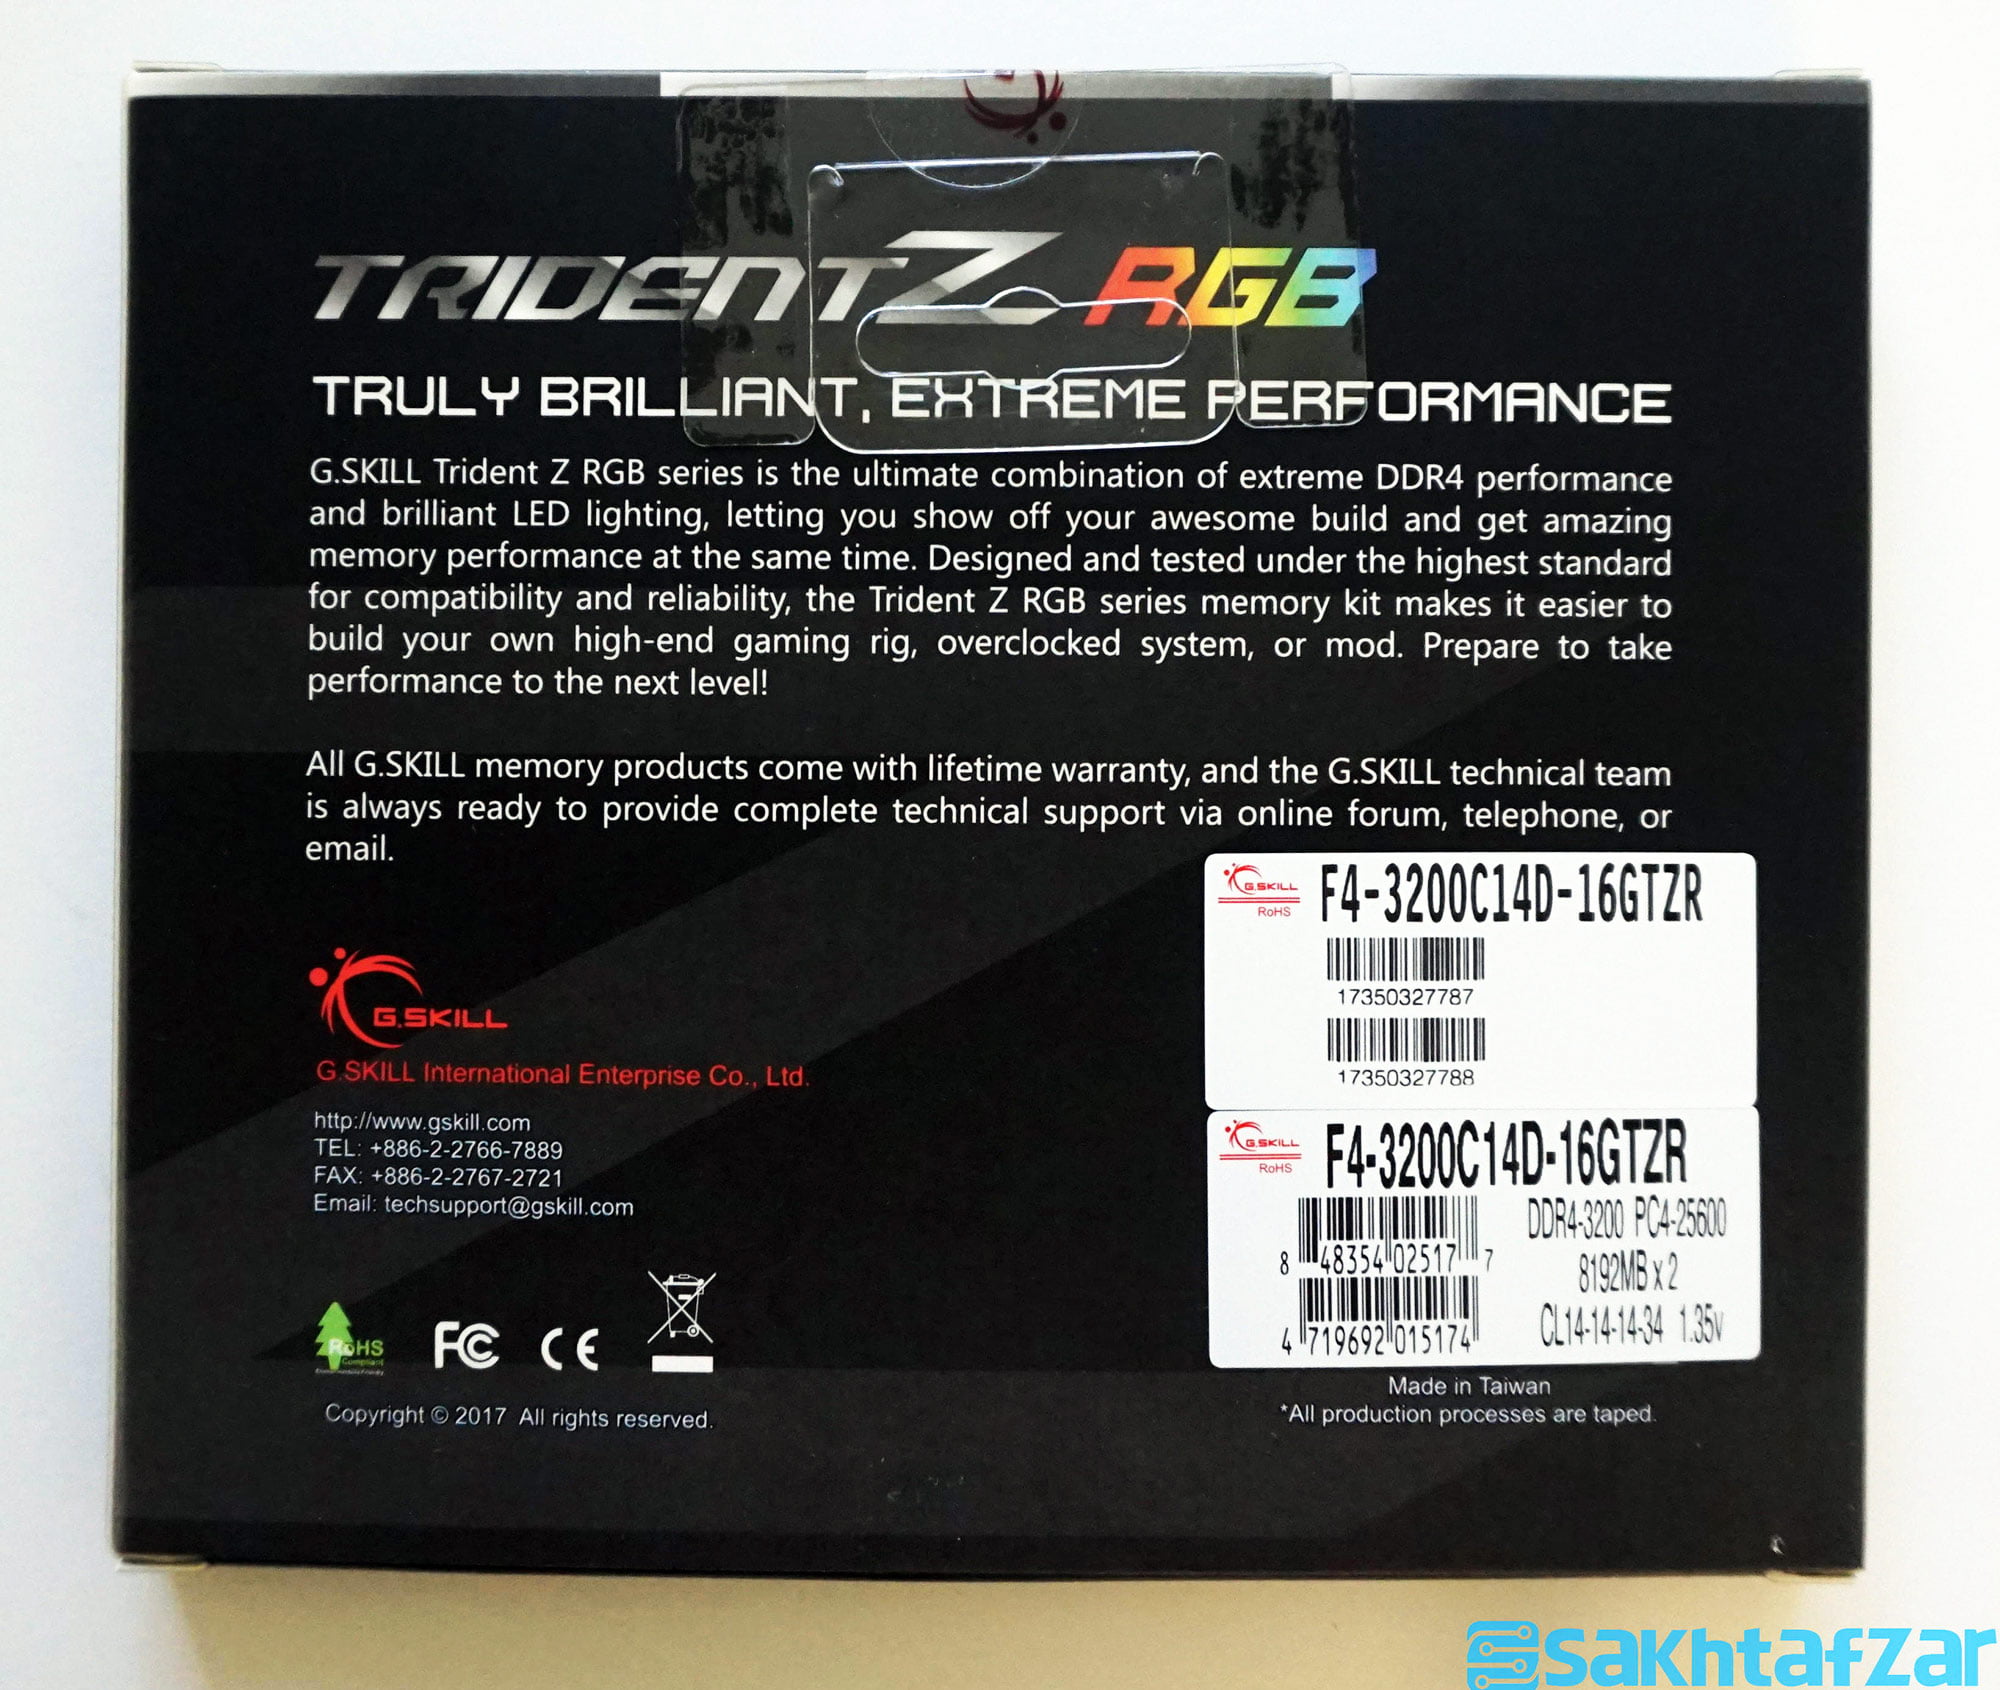 بررسی حافظه G.Skill Trident Z RGB DDR4-3200C14D-16GTZR